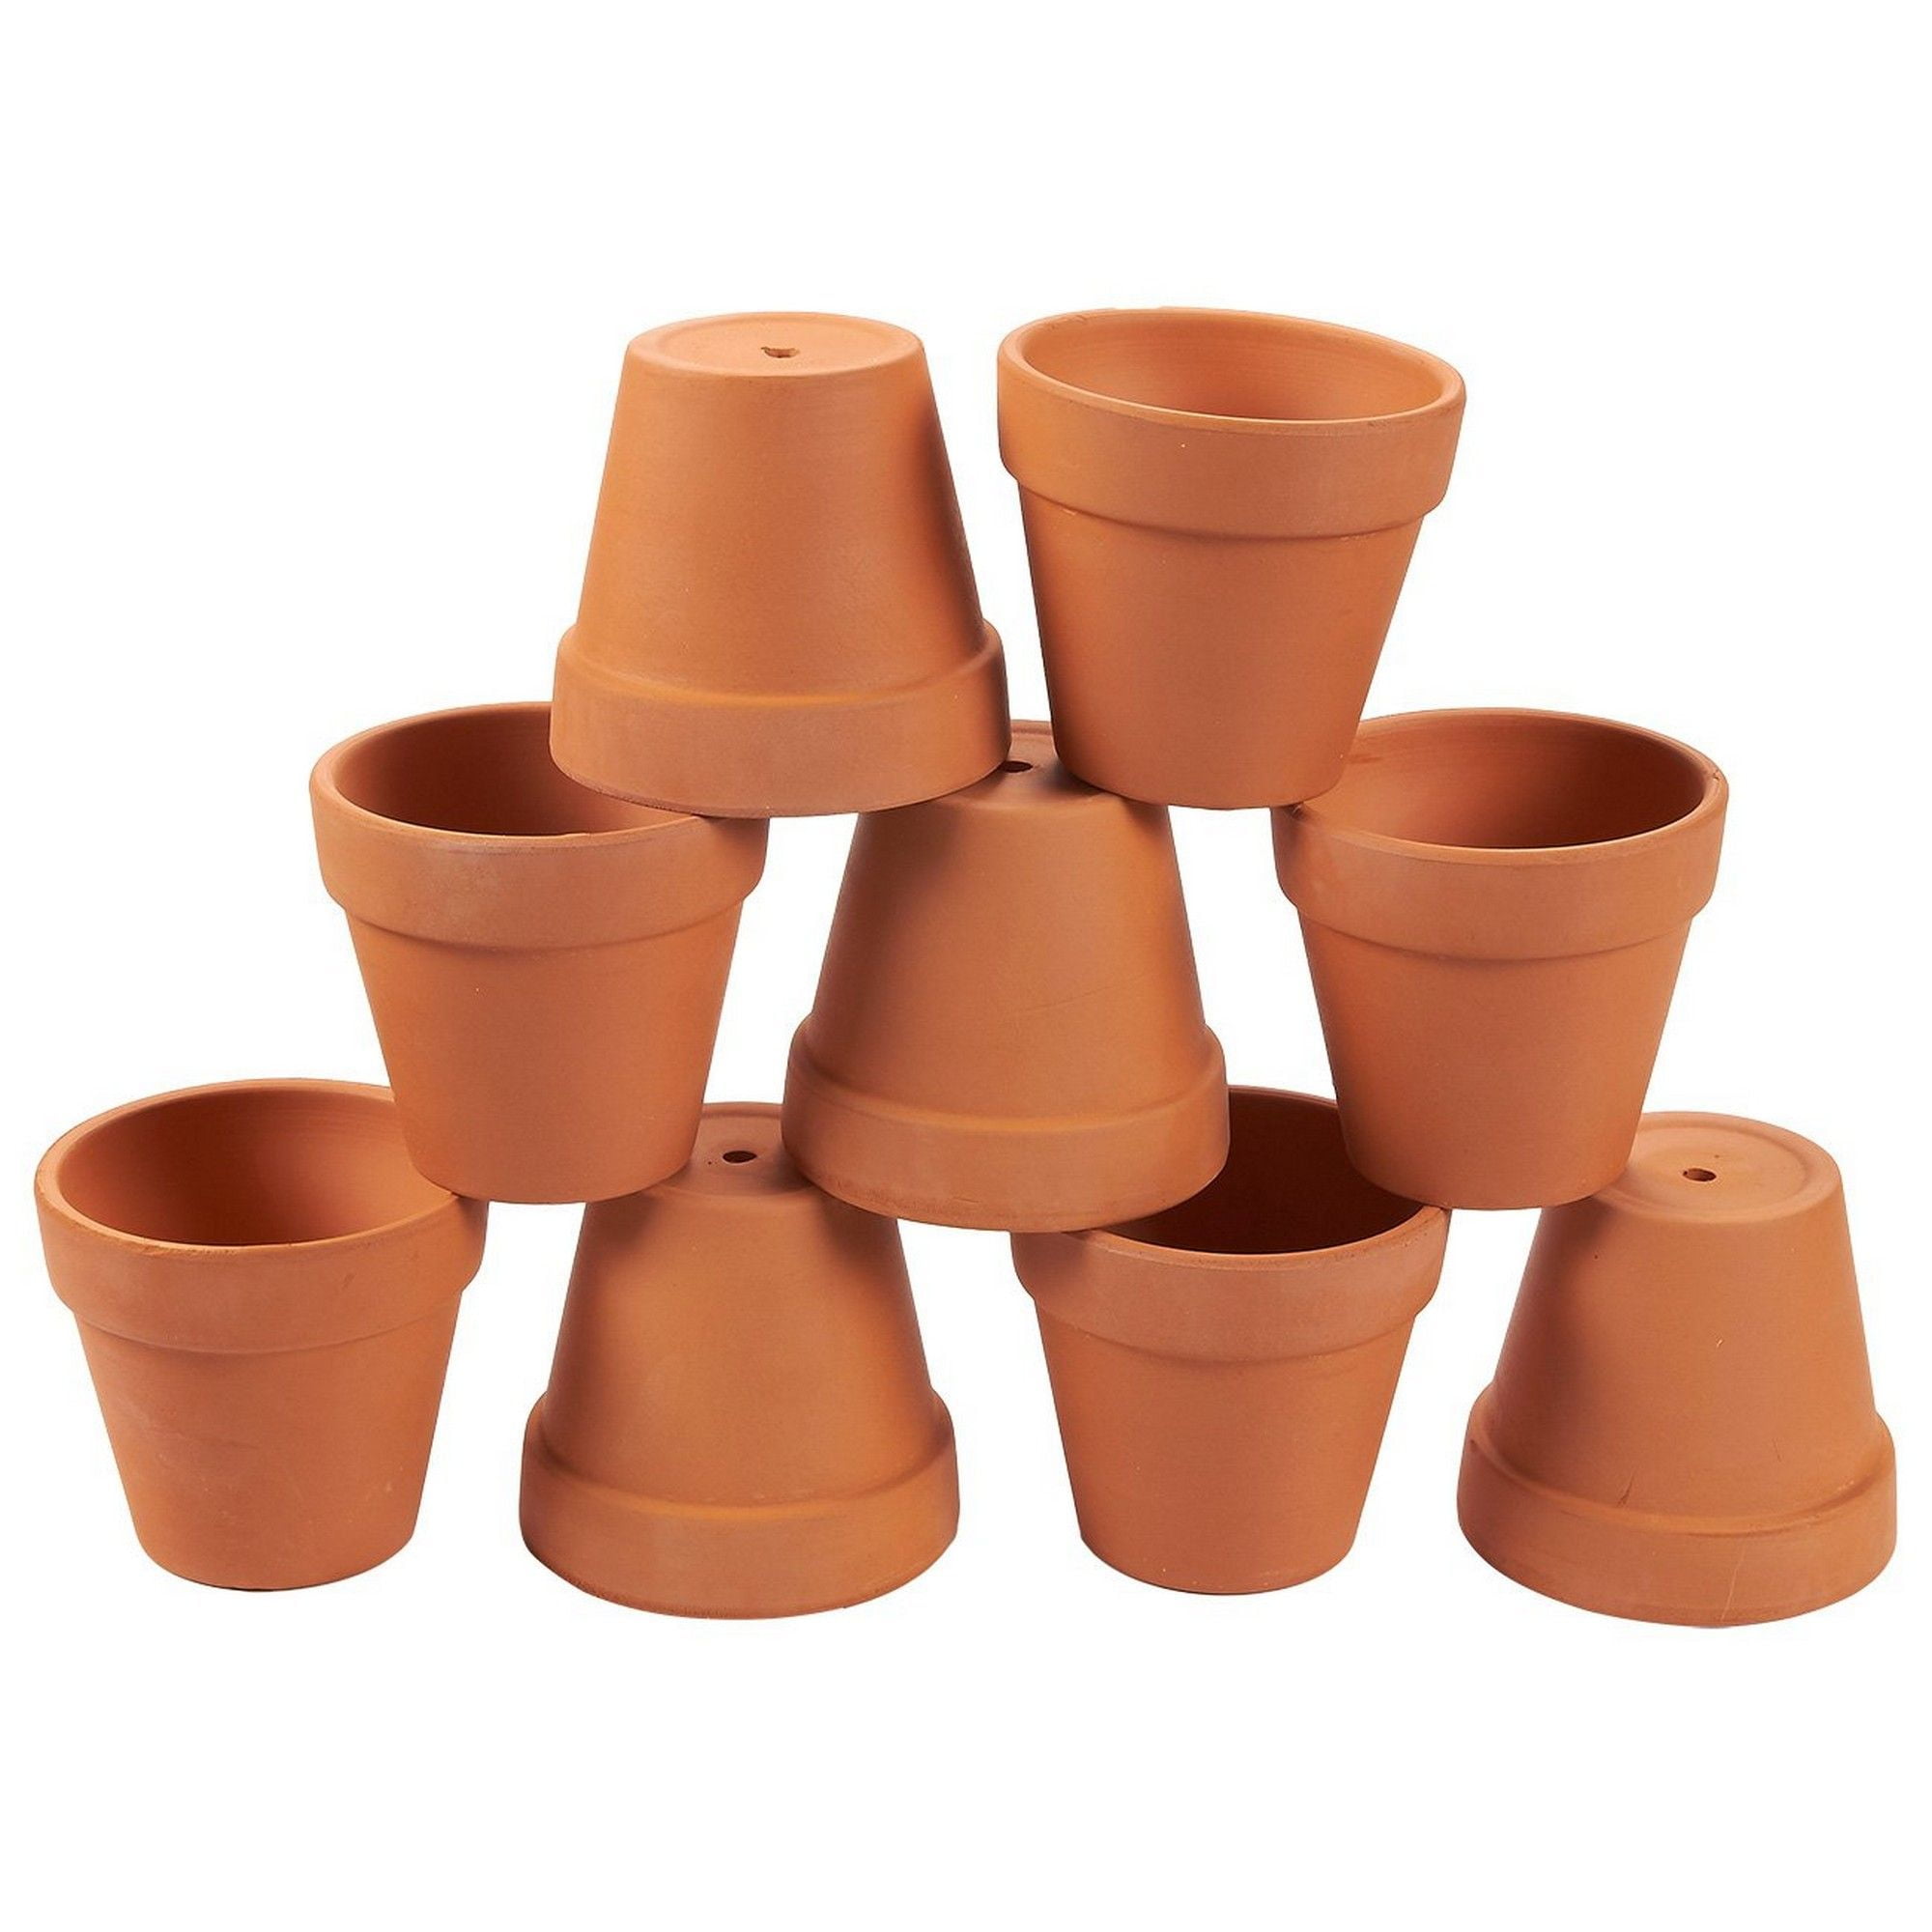  Terra Cotta  Pots  9 Pack Mini Clay Flower  Pot  Planters 